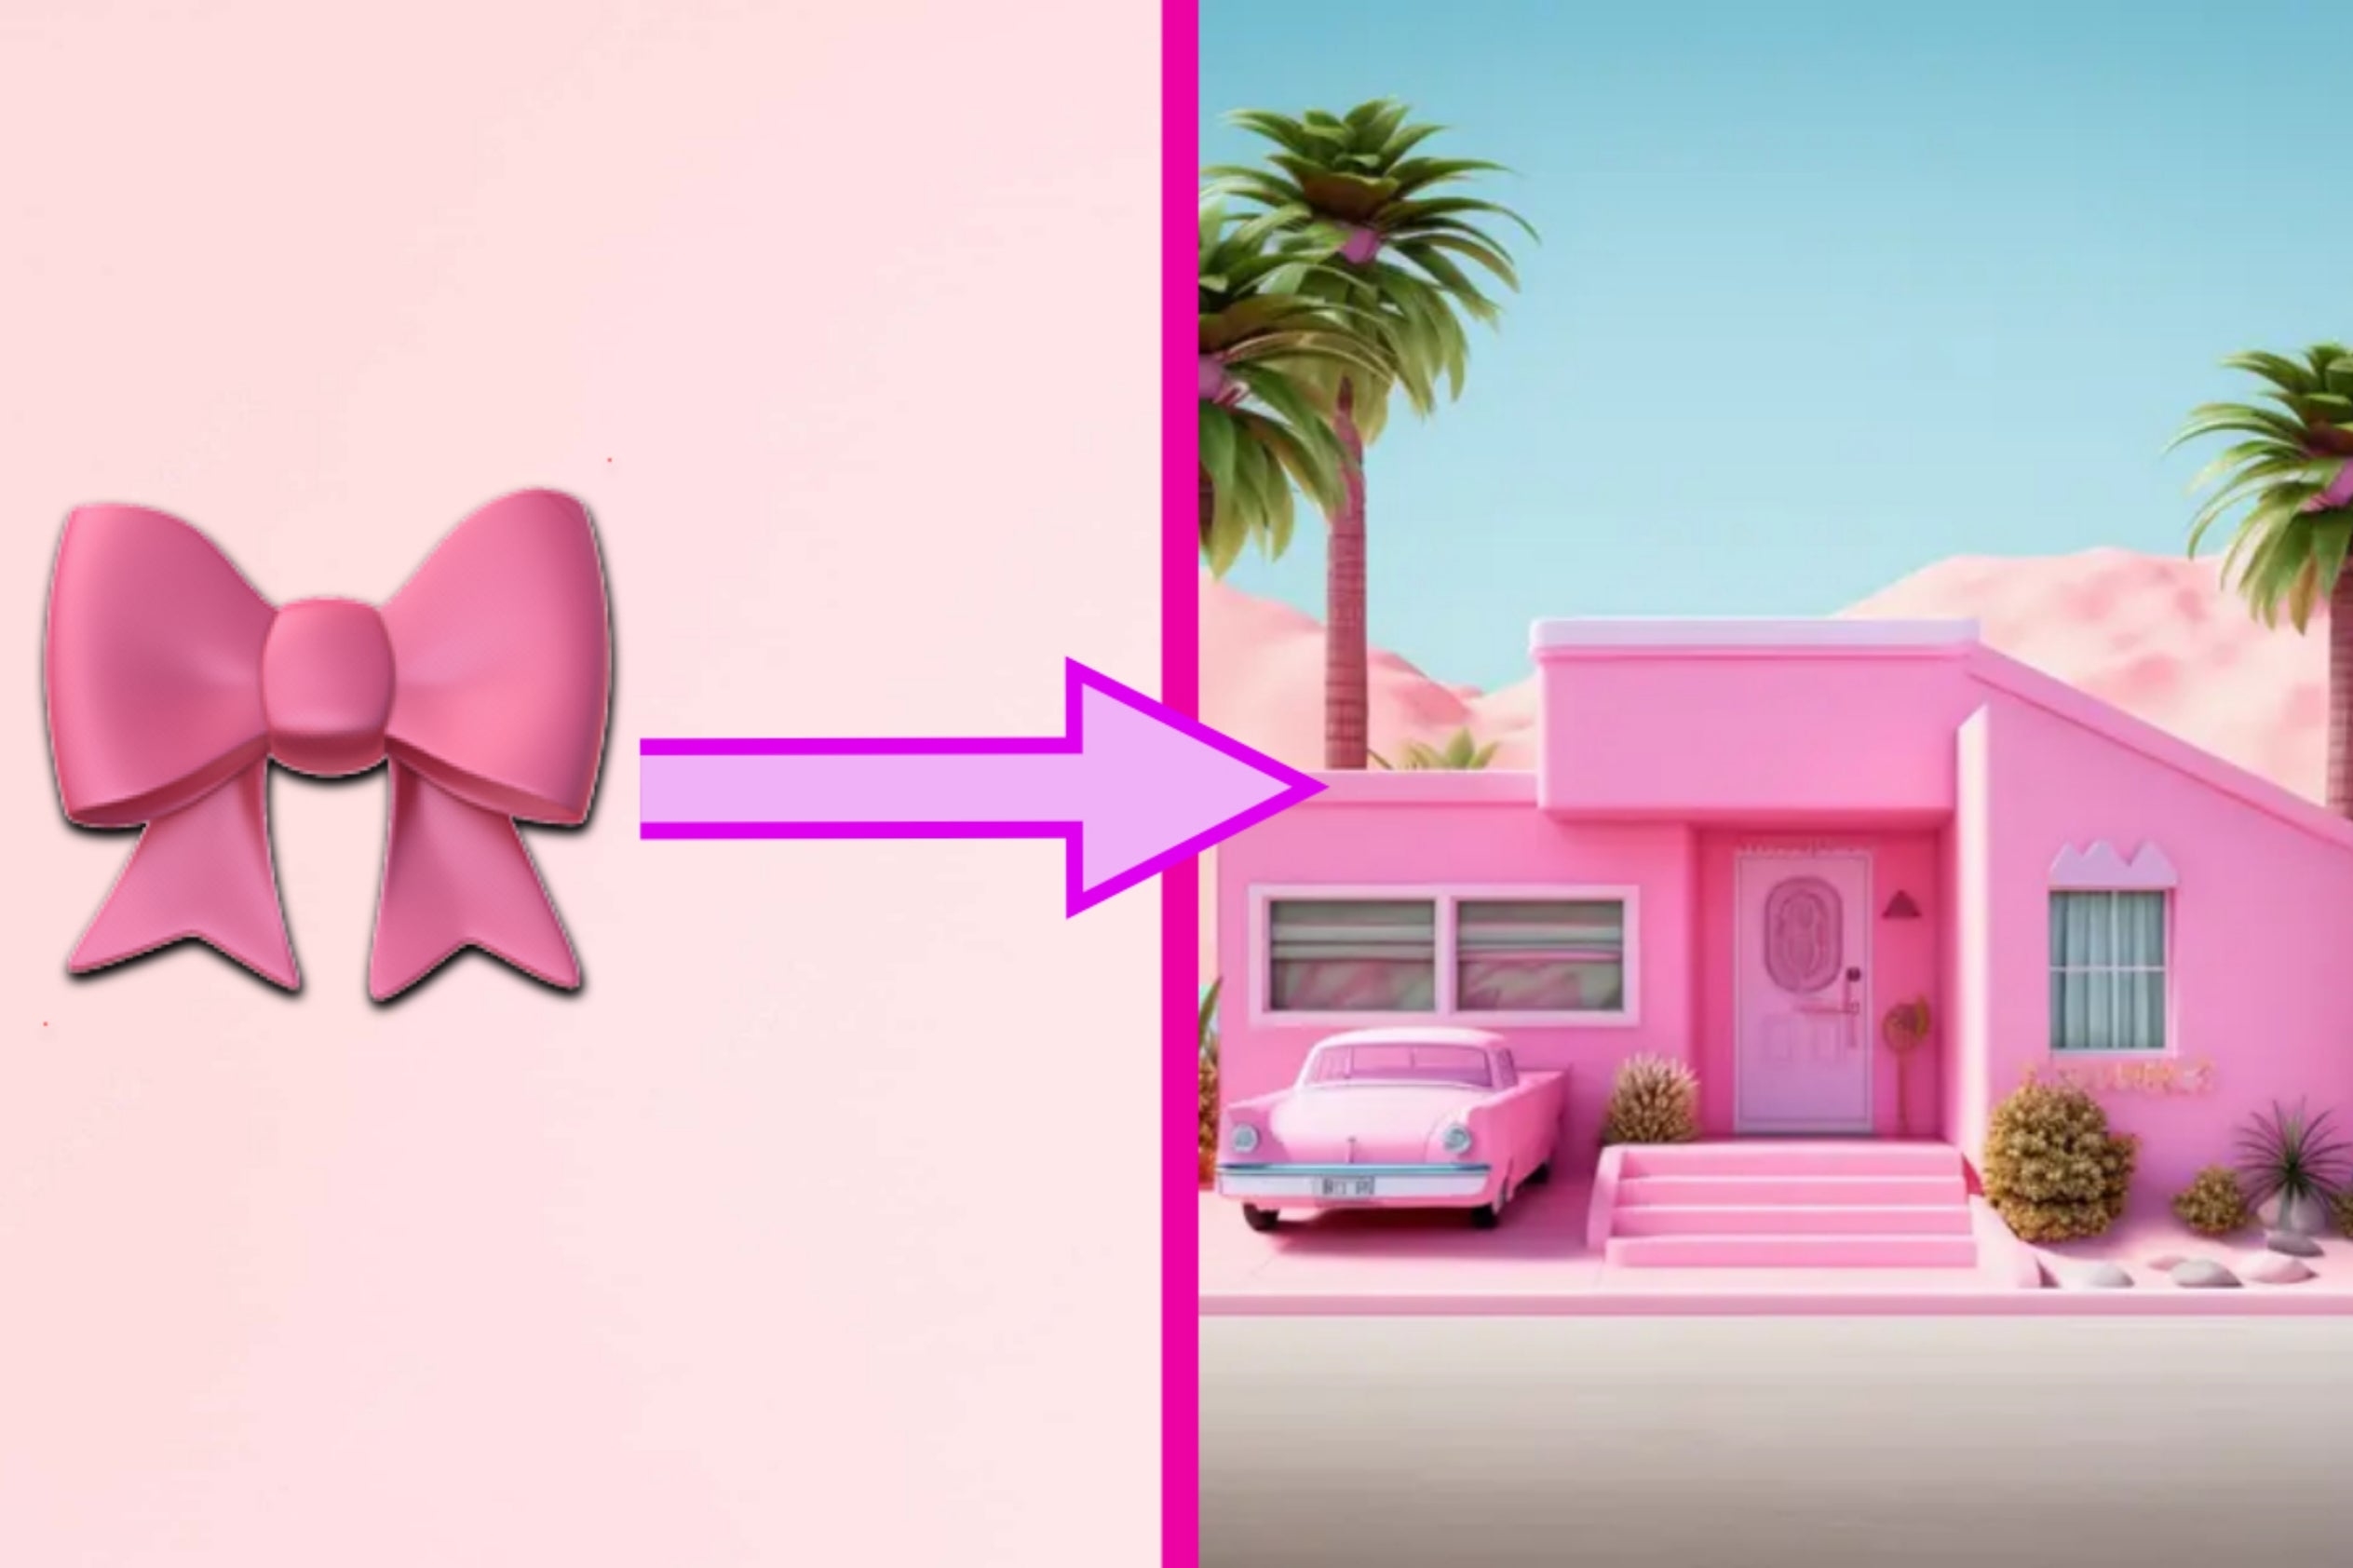 bow emoji wit an arrow pointing to a barbie house